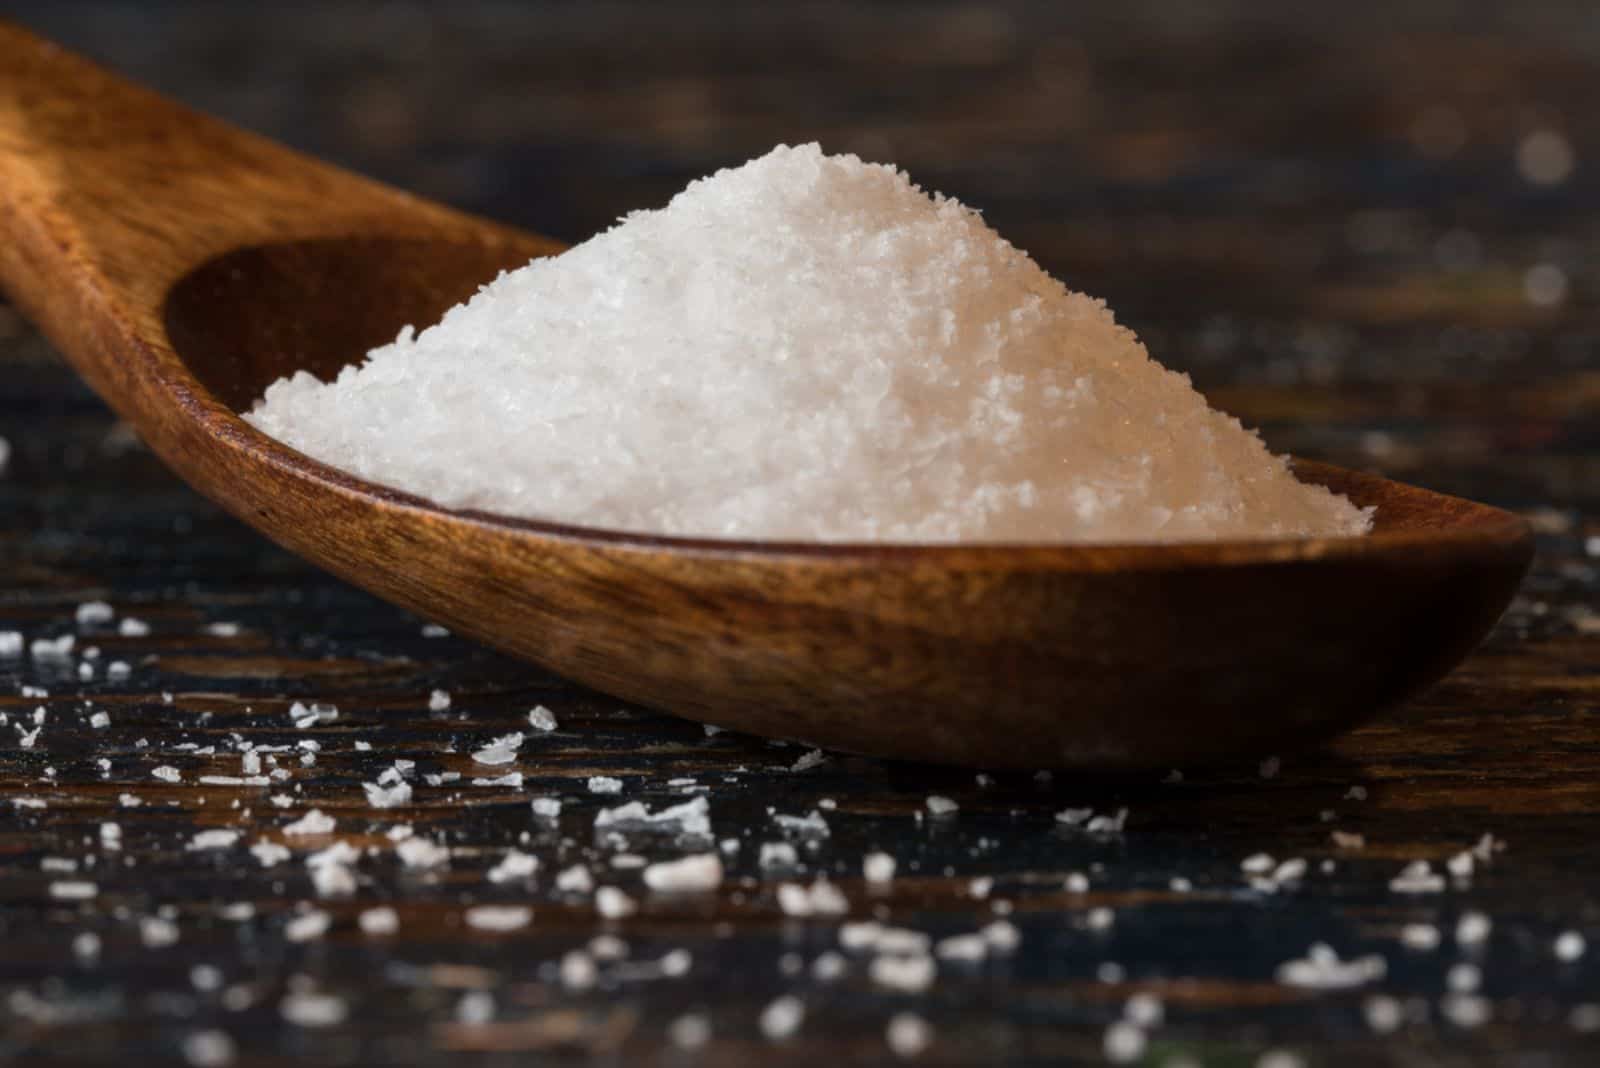 Kosher Salt on a Wooden Spoon